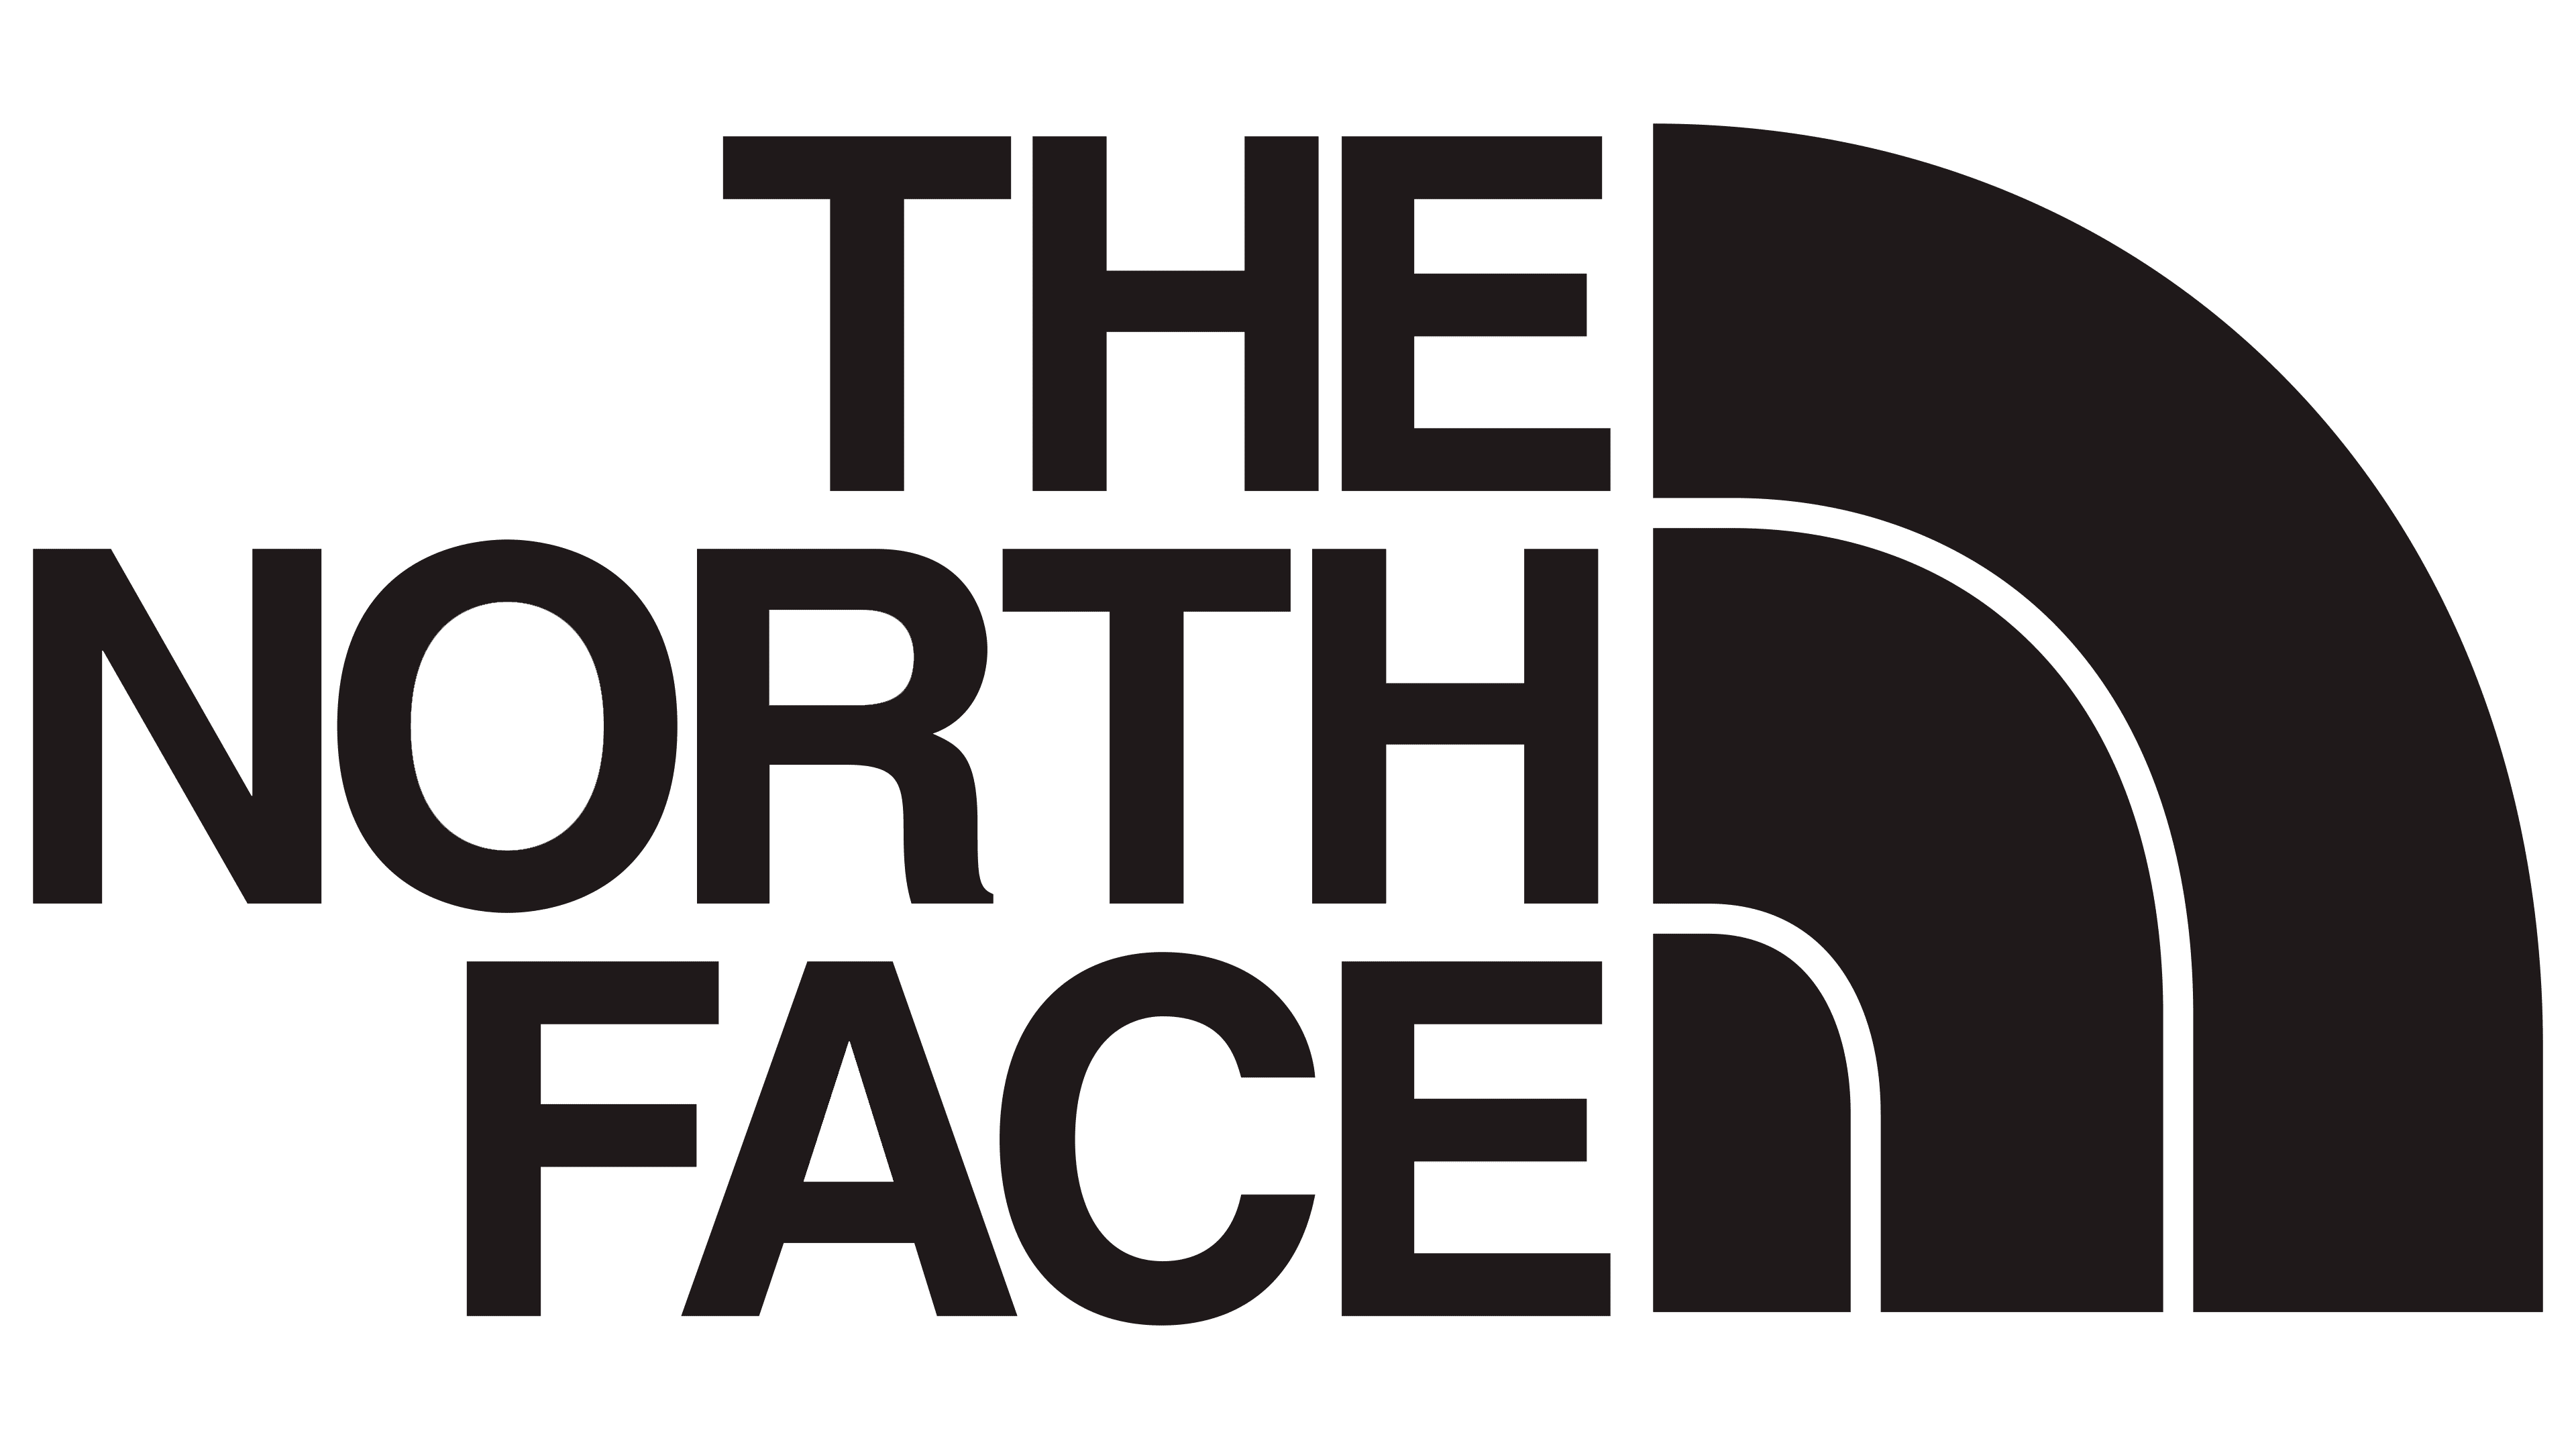 Logo North Face - legionreal